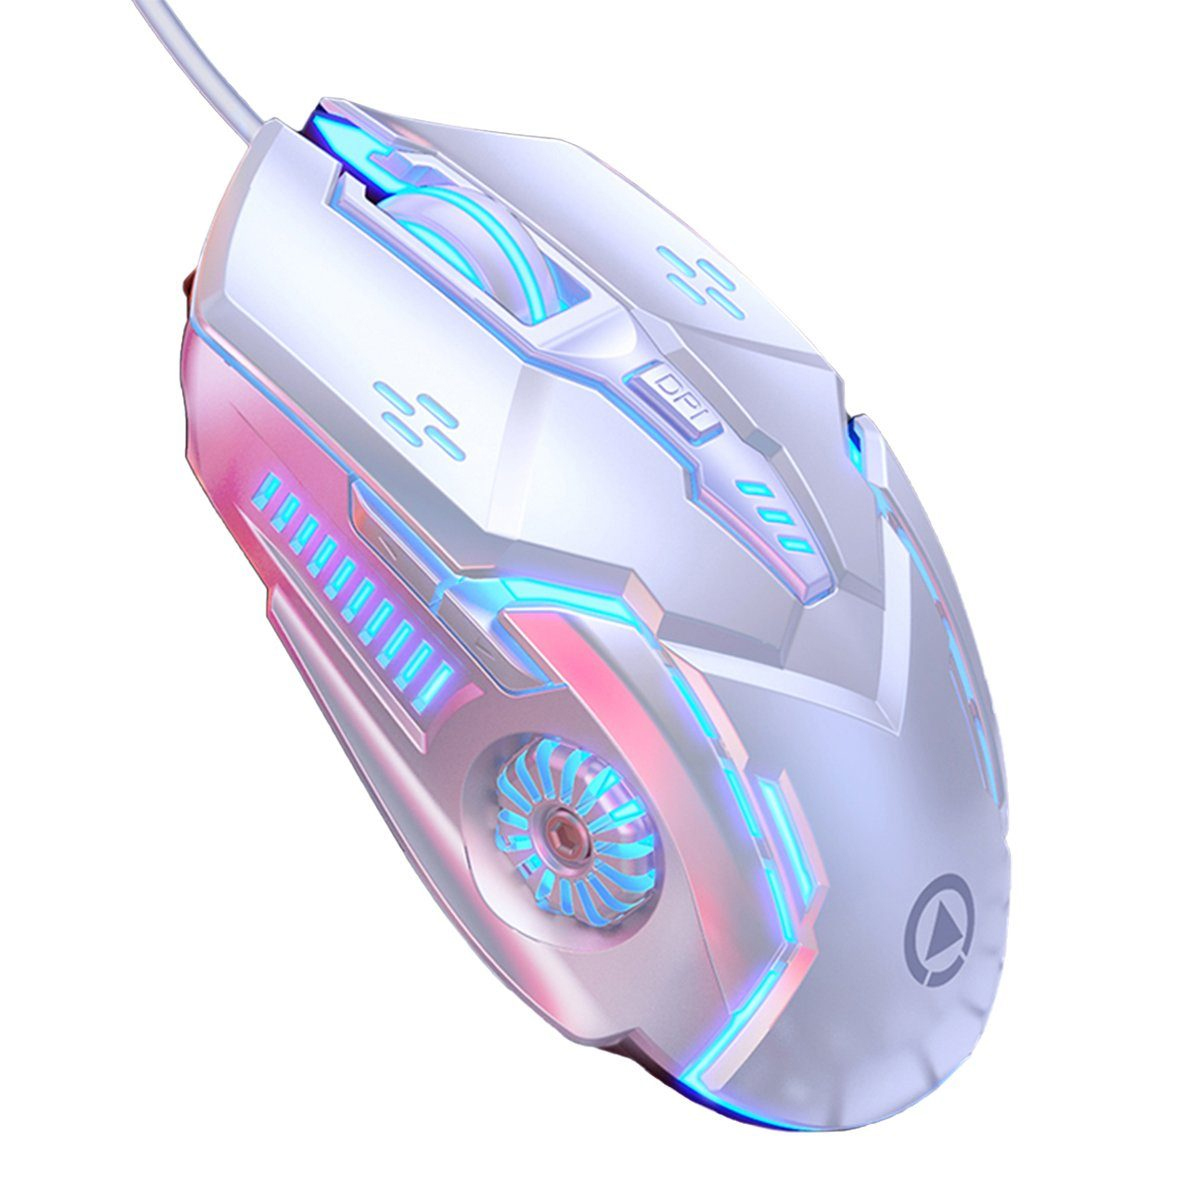 KINSI Maus Maus,6-Tasten Gaming-Maus,mechanische weiß Gaming-Maus,Lautlose Maus,kabelgebundene Maus,